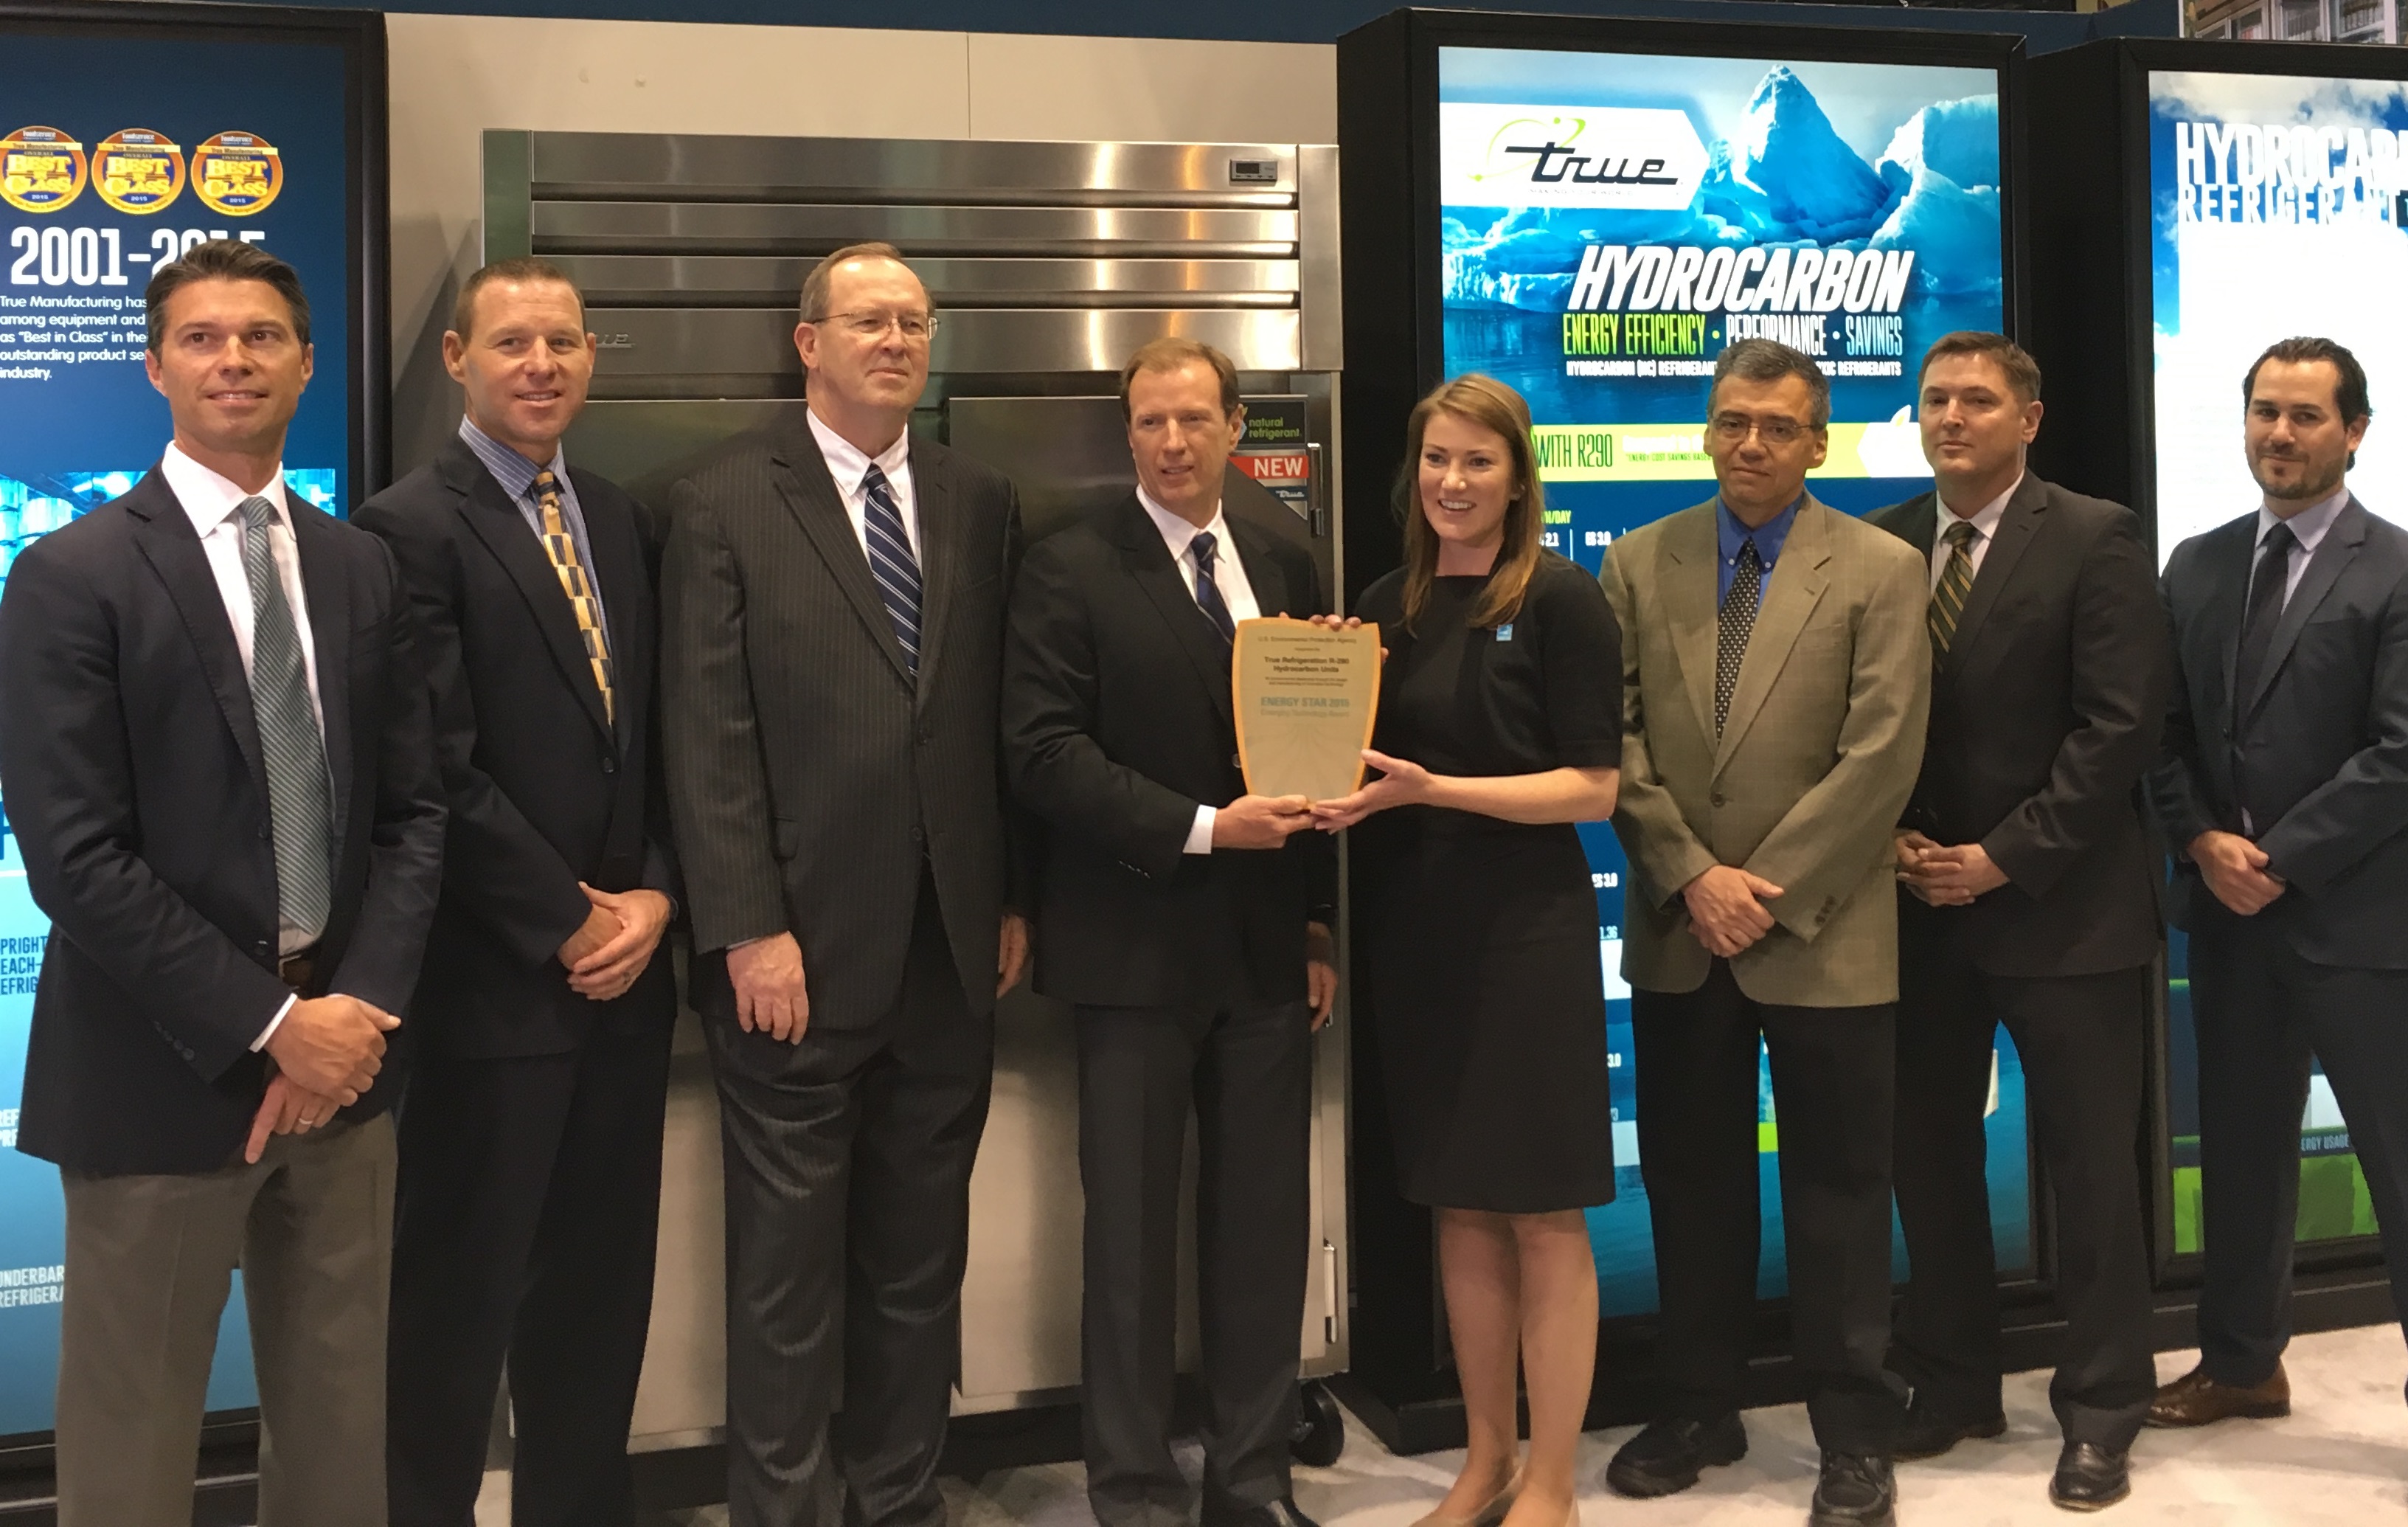  True Manufacturing representatives receiving an award from ENERGY STAR